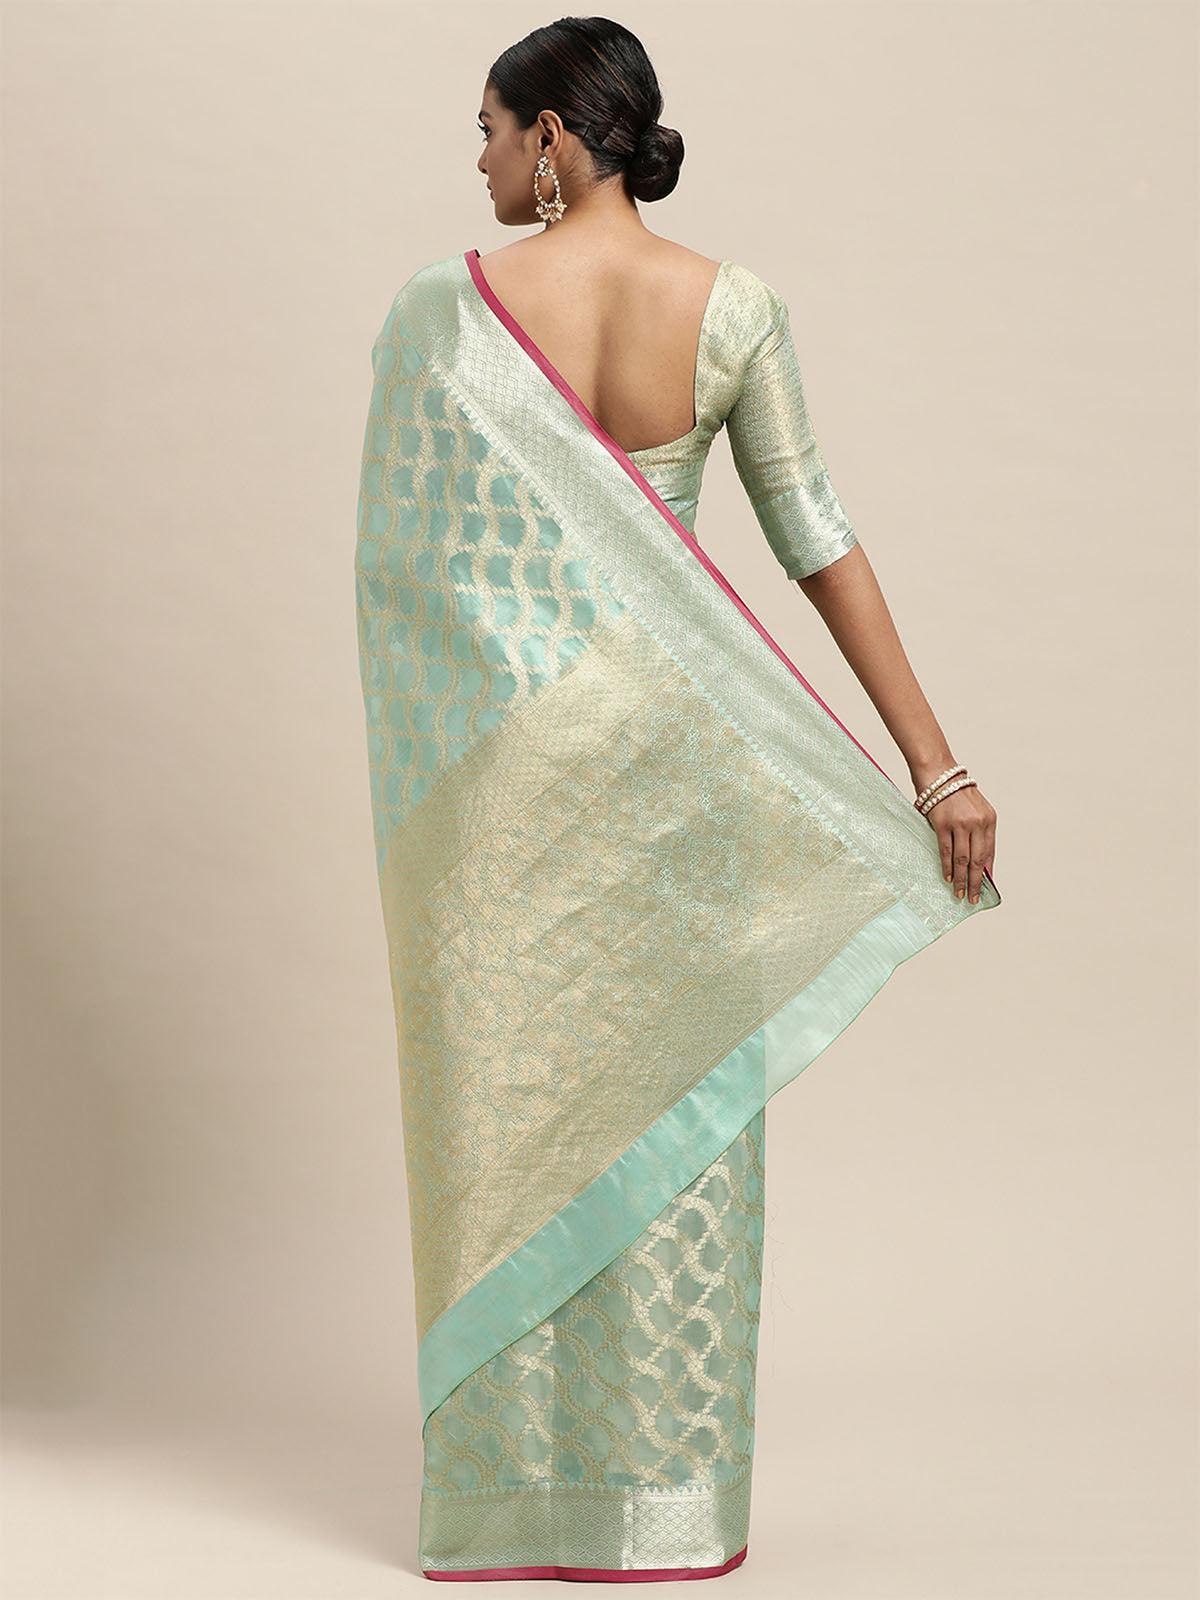 Women's Silk Blend Sea Green Woven Design Designer Saree With Blouse Piece - Odette